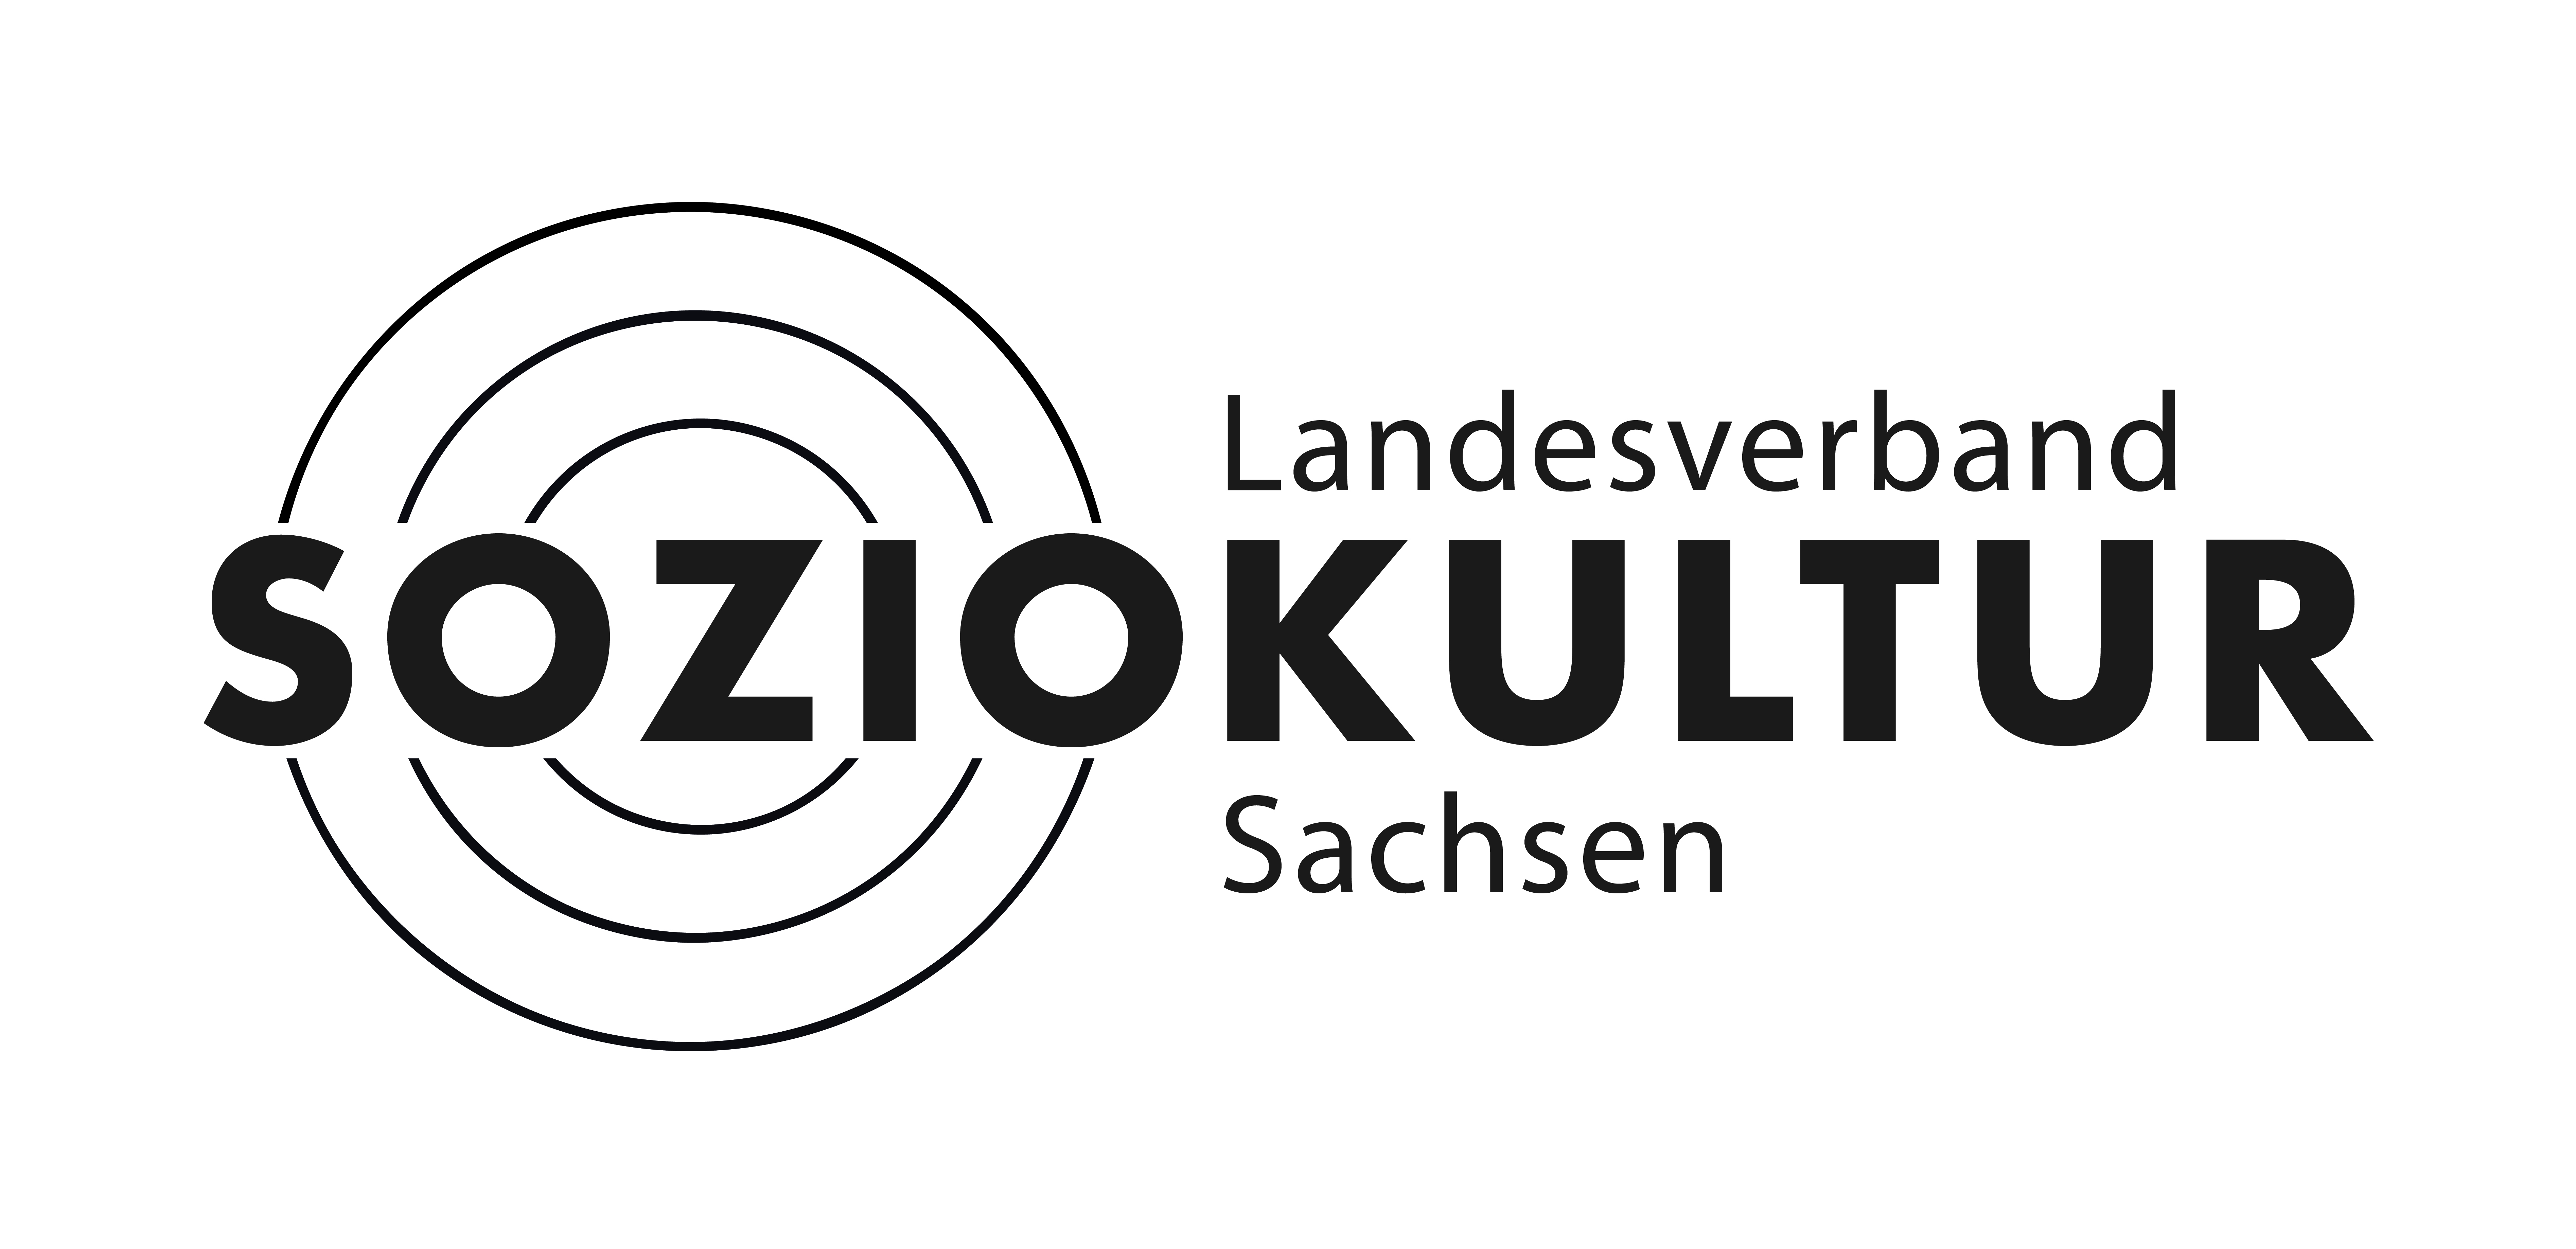 Landesverband Soziokultur Sachsen e.V.